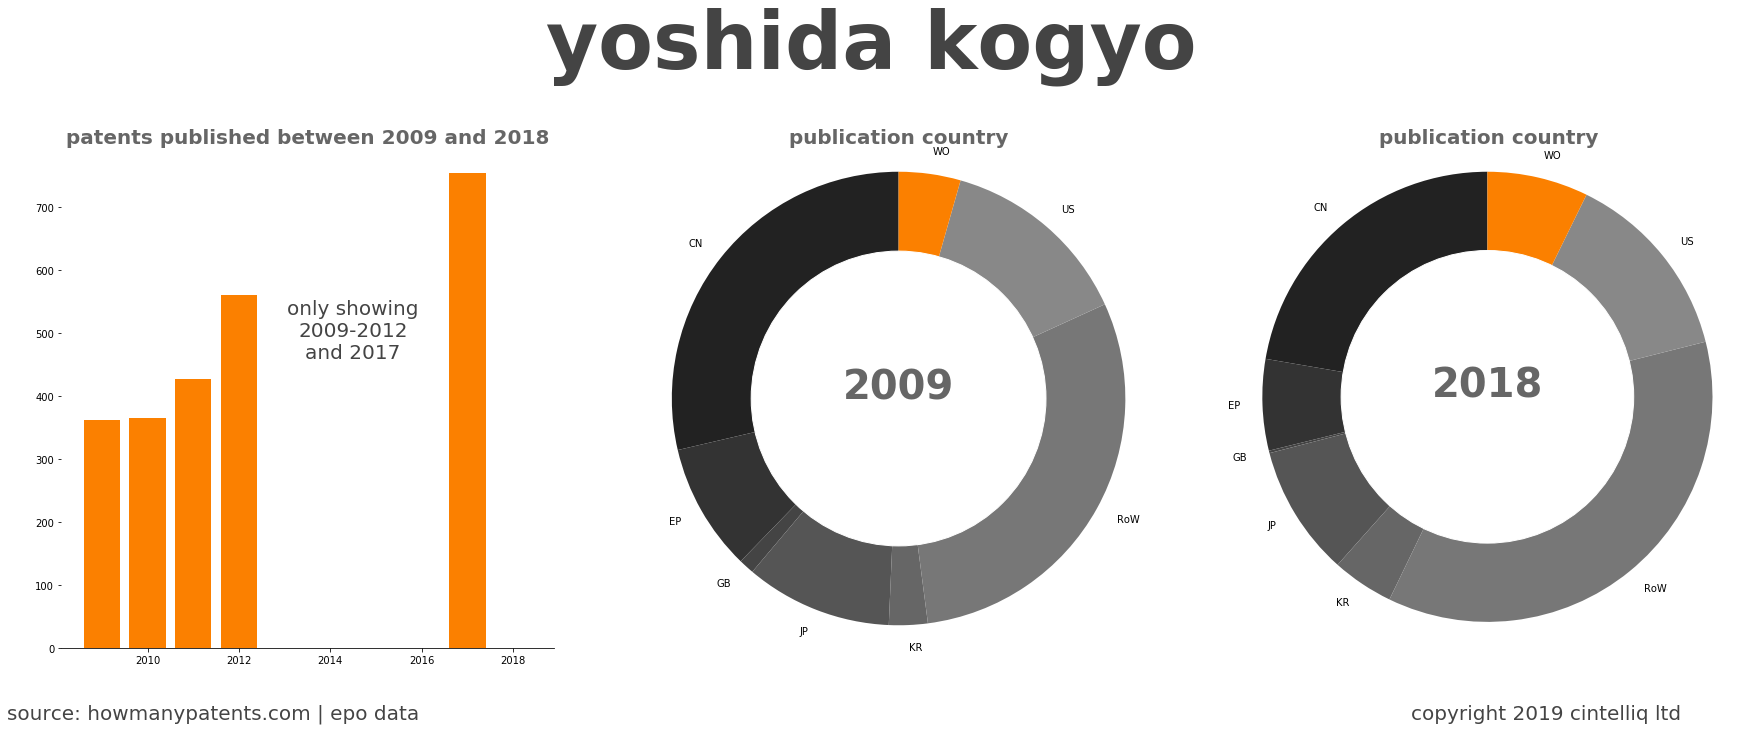 summary of patents for Yoshida Kogyo